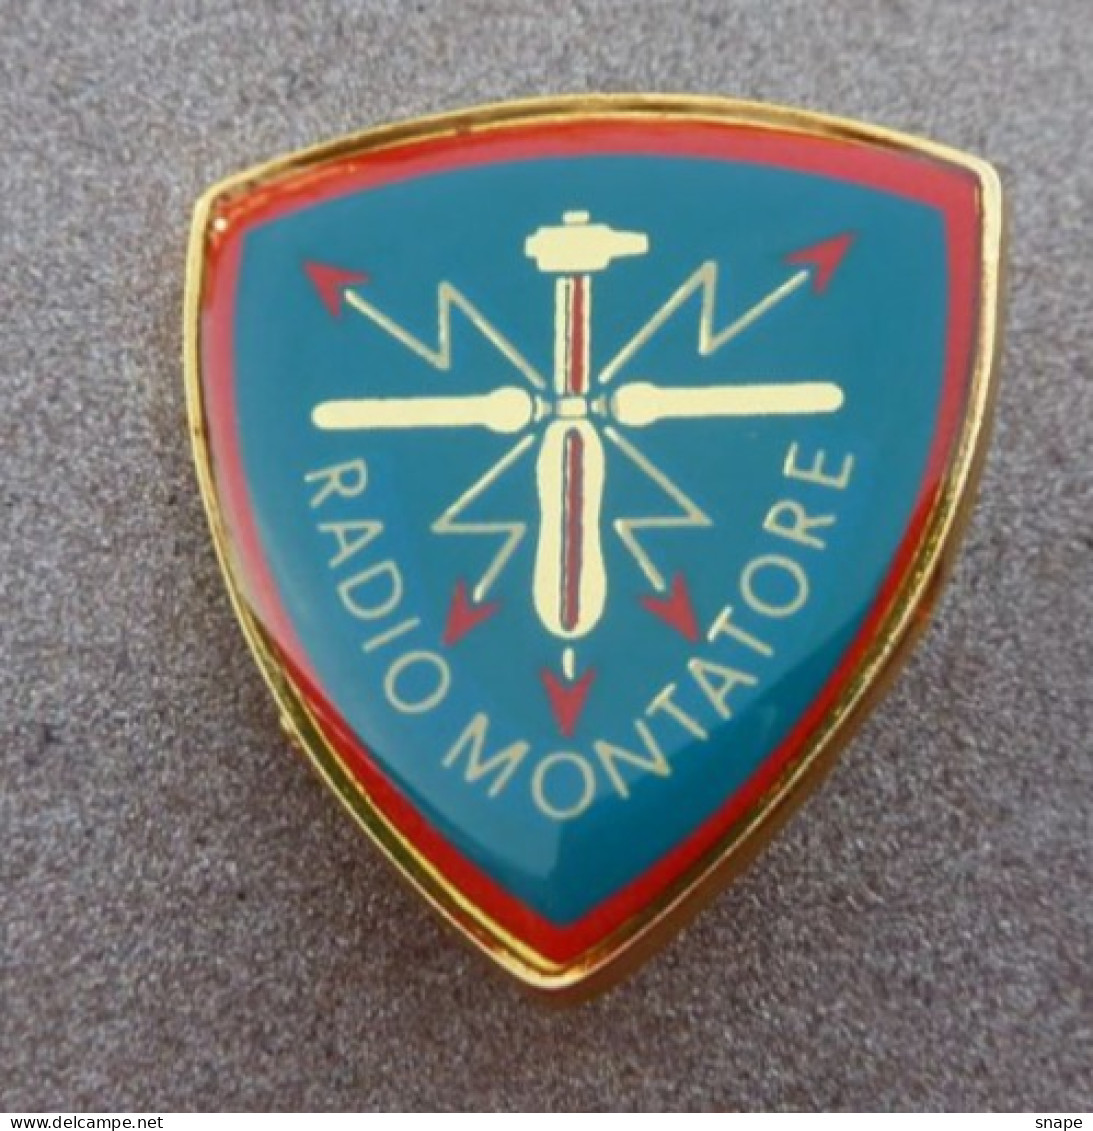 DISTINTIVO Vetrificato A Spilla Radiomontatore - Esercito Italiano Incarichi - Italian Army Pinned Badge - Used (286) - Armée De Terre